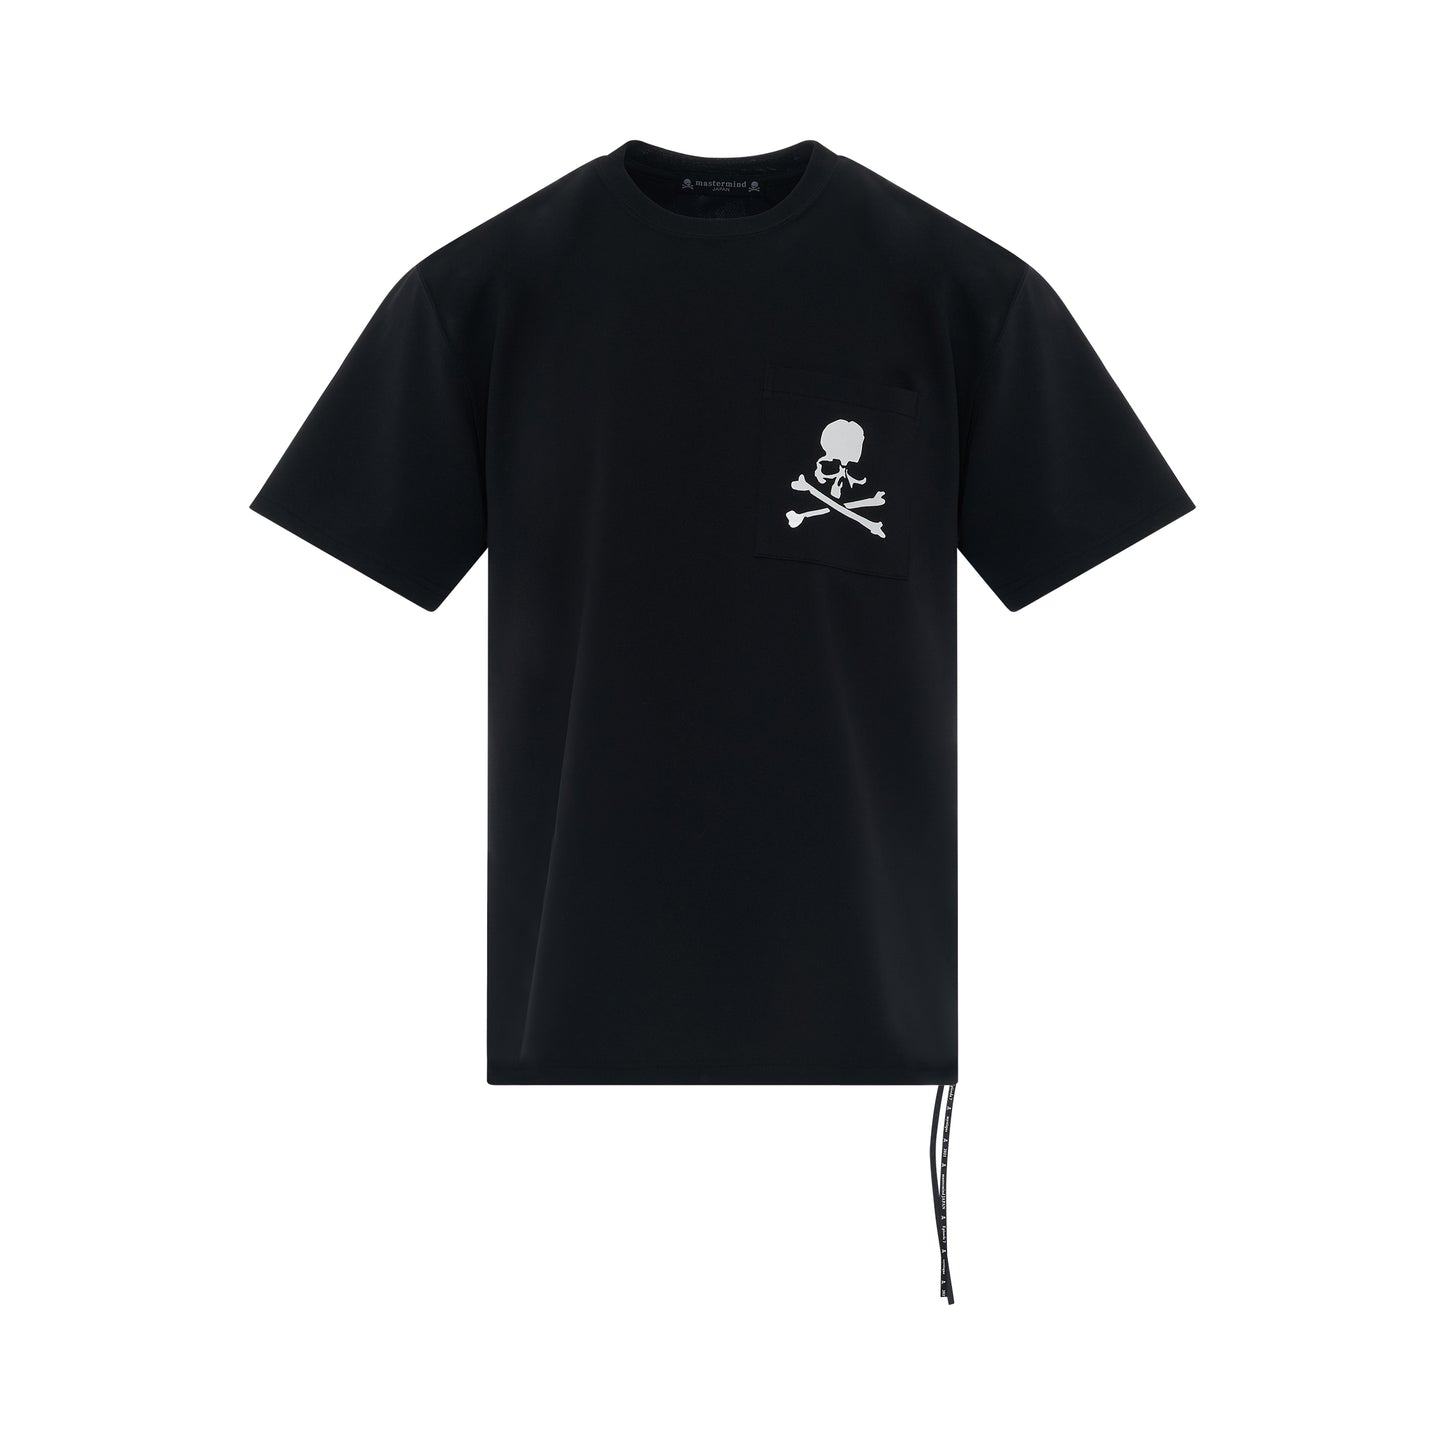 Slicone Skull On Pocket T-Shirt in Black